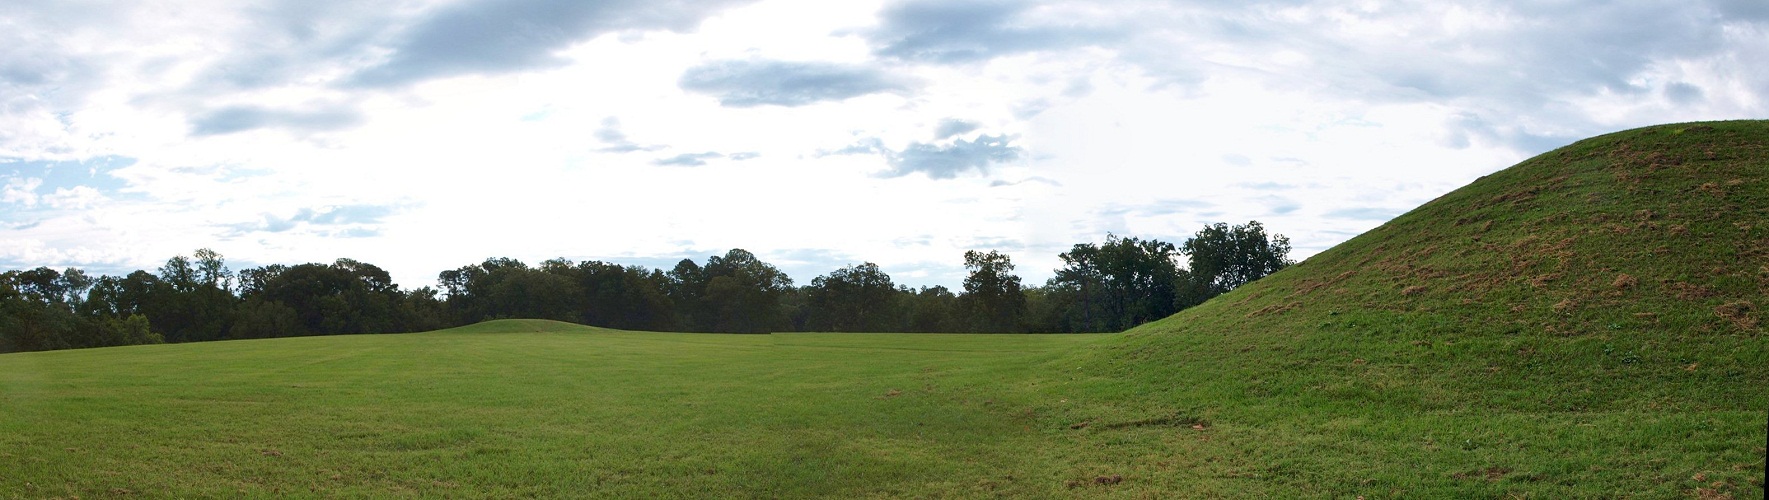 Emerald Mound, Mississippi